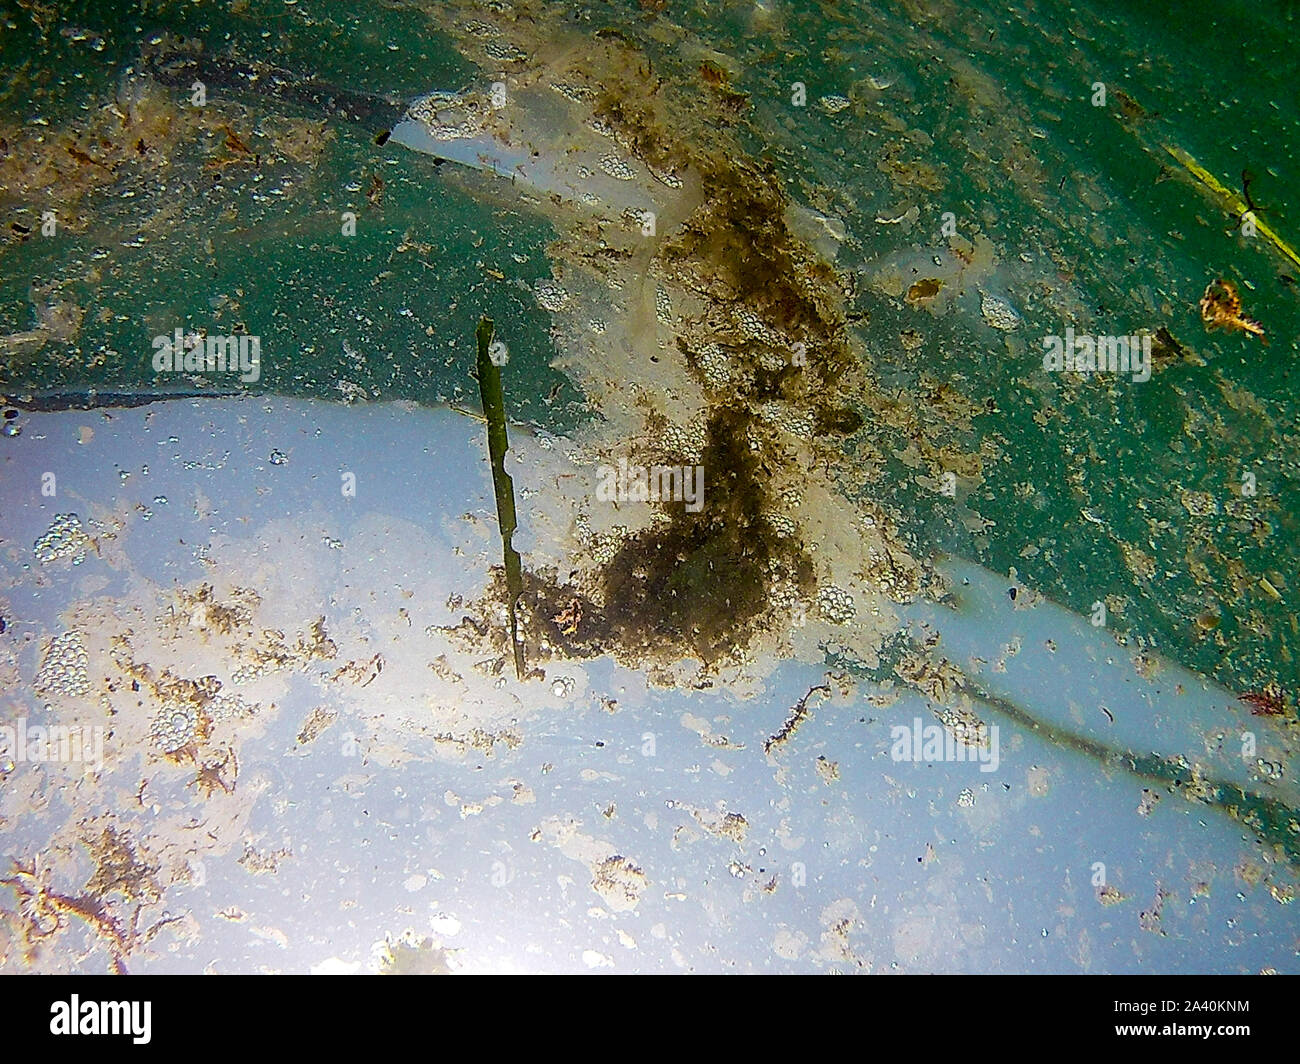 Bonassola (Sp) - mare sporco e invaso da meduse Stock Photo